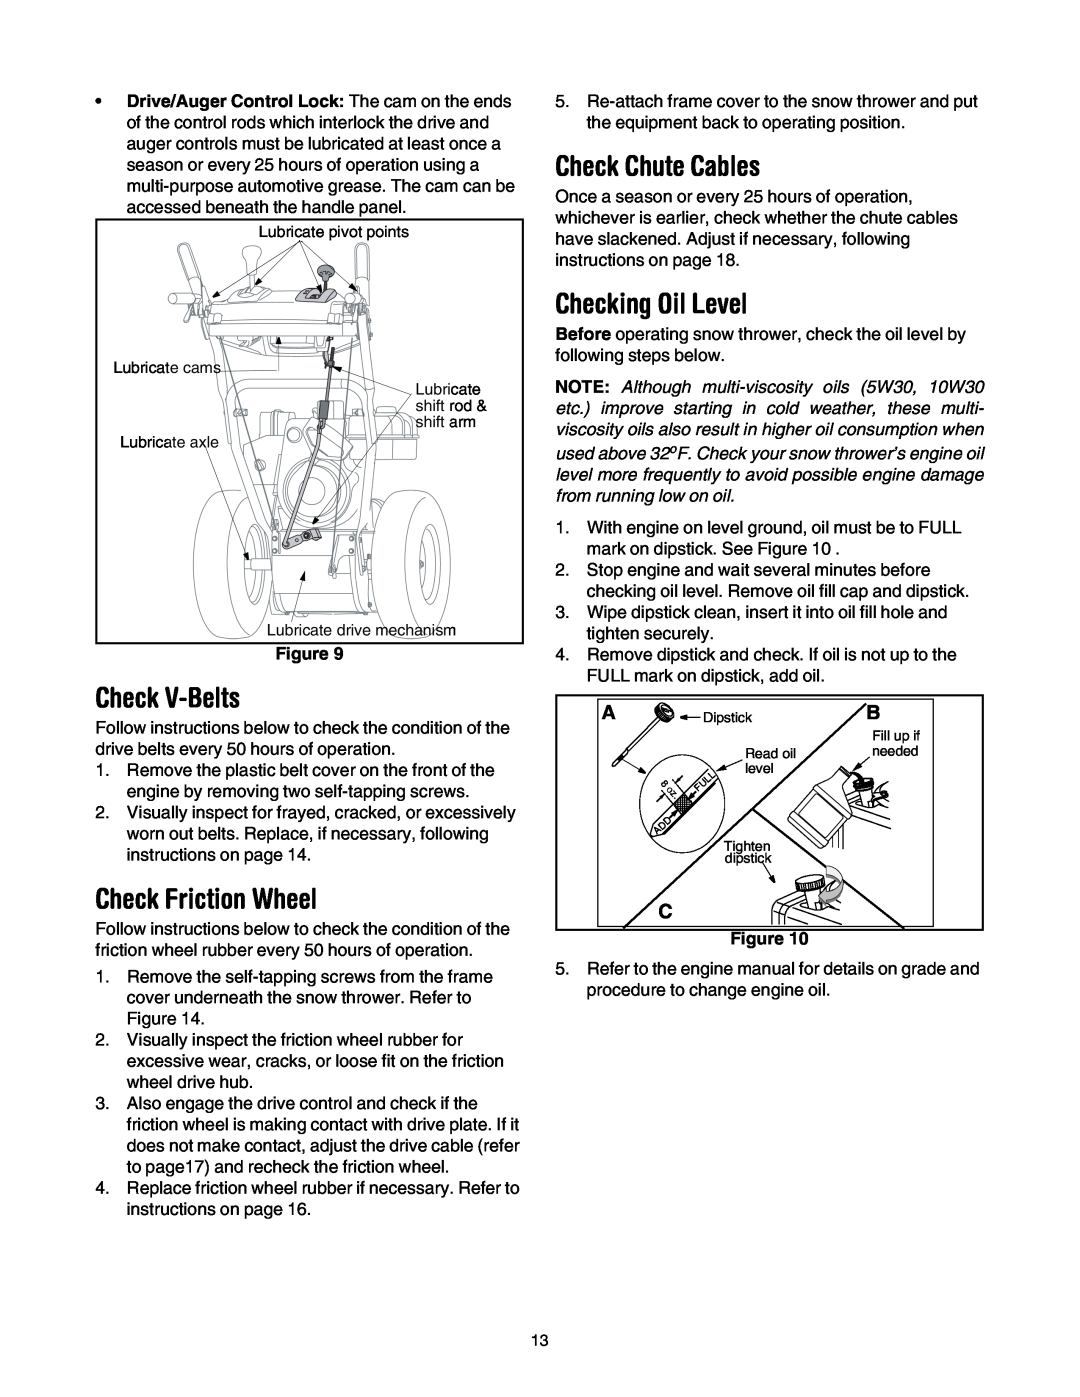 Yard-Man 5KL manual Check V-Belts, Check Friction Wheel, Check Chute Cables, Checking Oil Level 